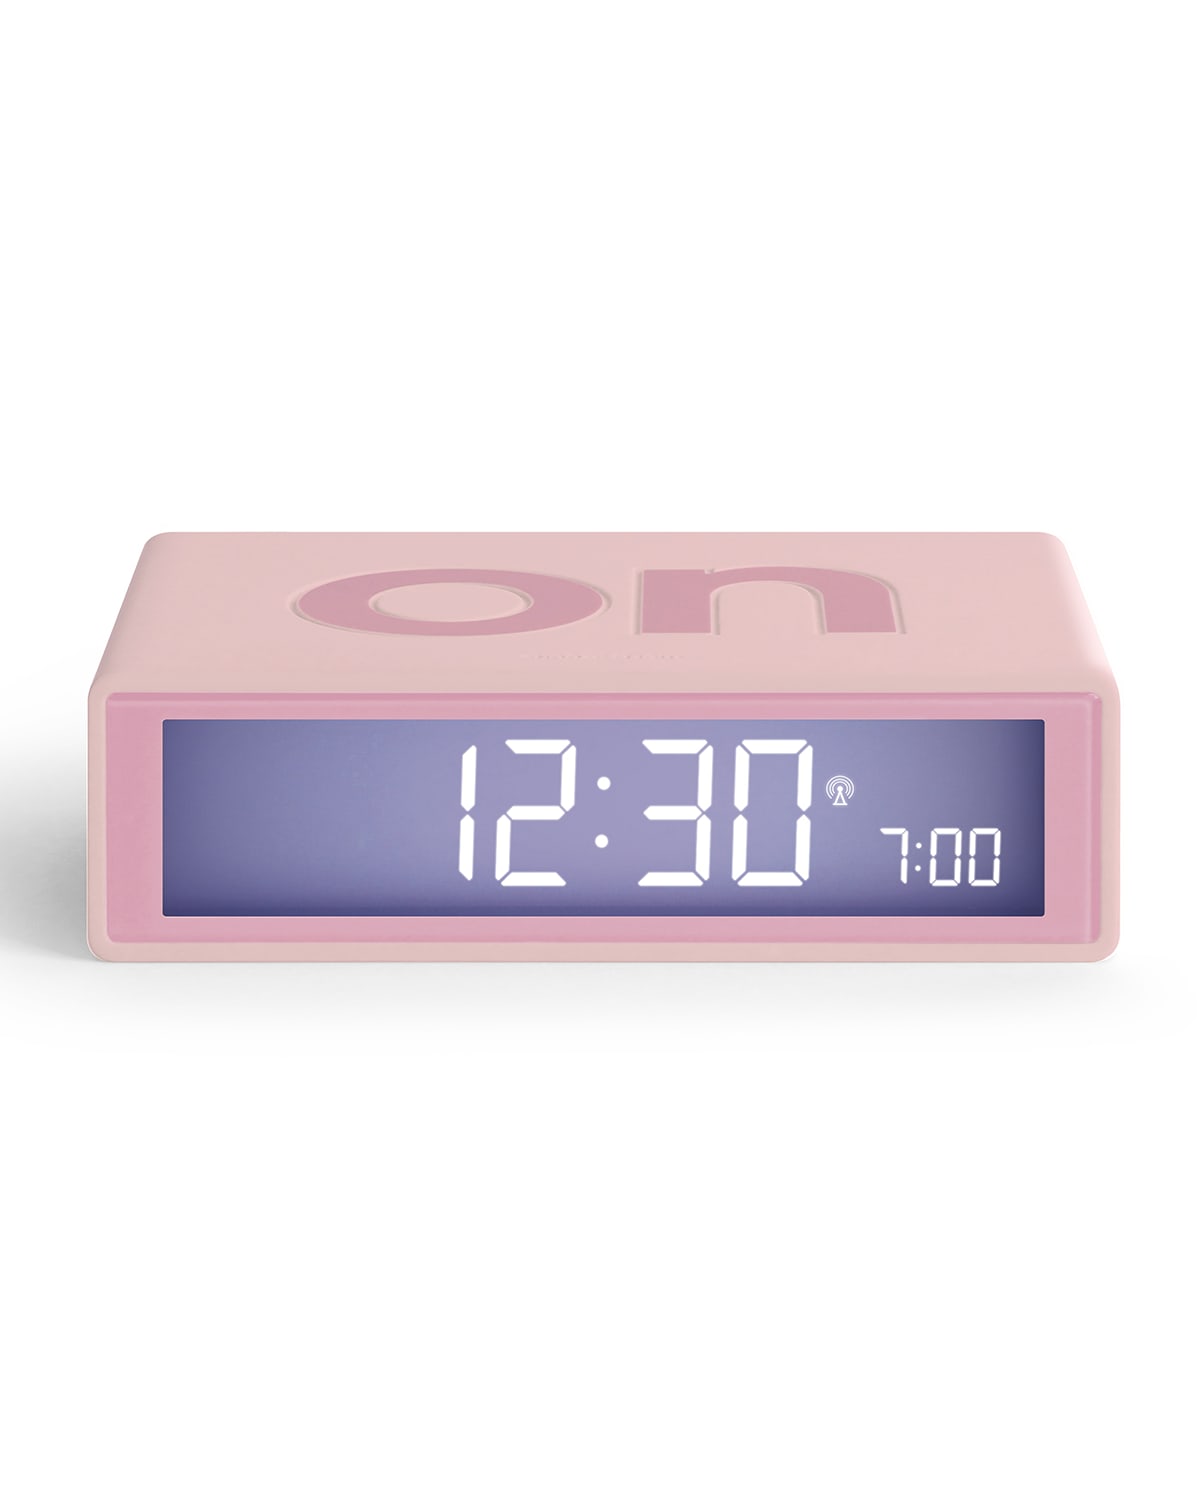 Lexon Design Flip+ Reversible LCD Alarm Clock